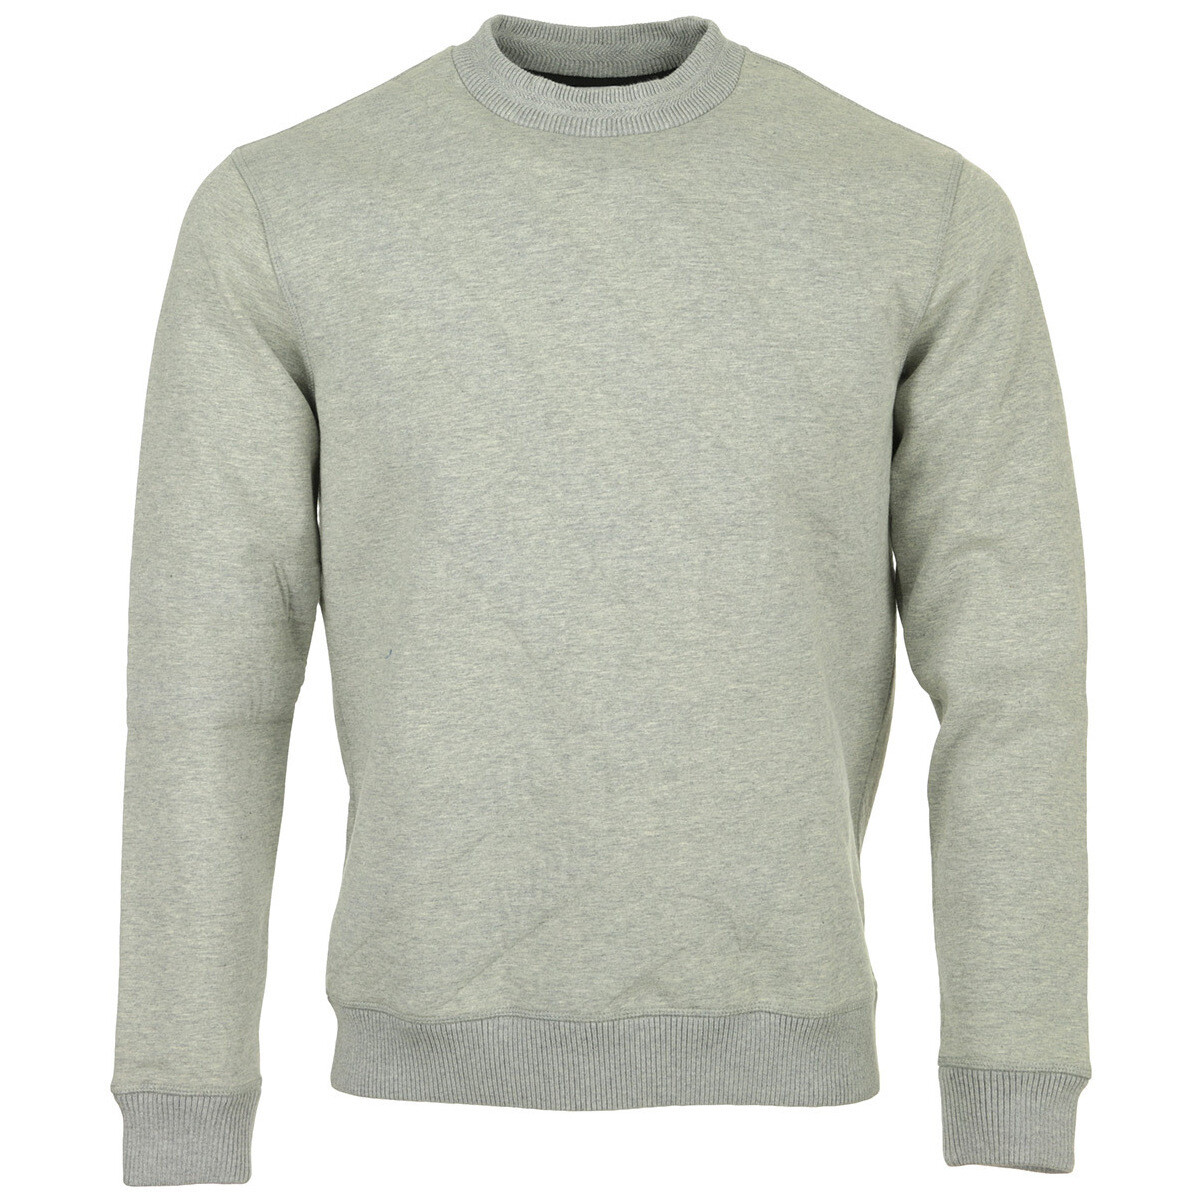 Textiel Heren Sweaters / Sweatshirts Csb London Middleton Grijs